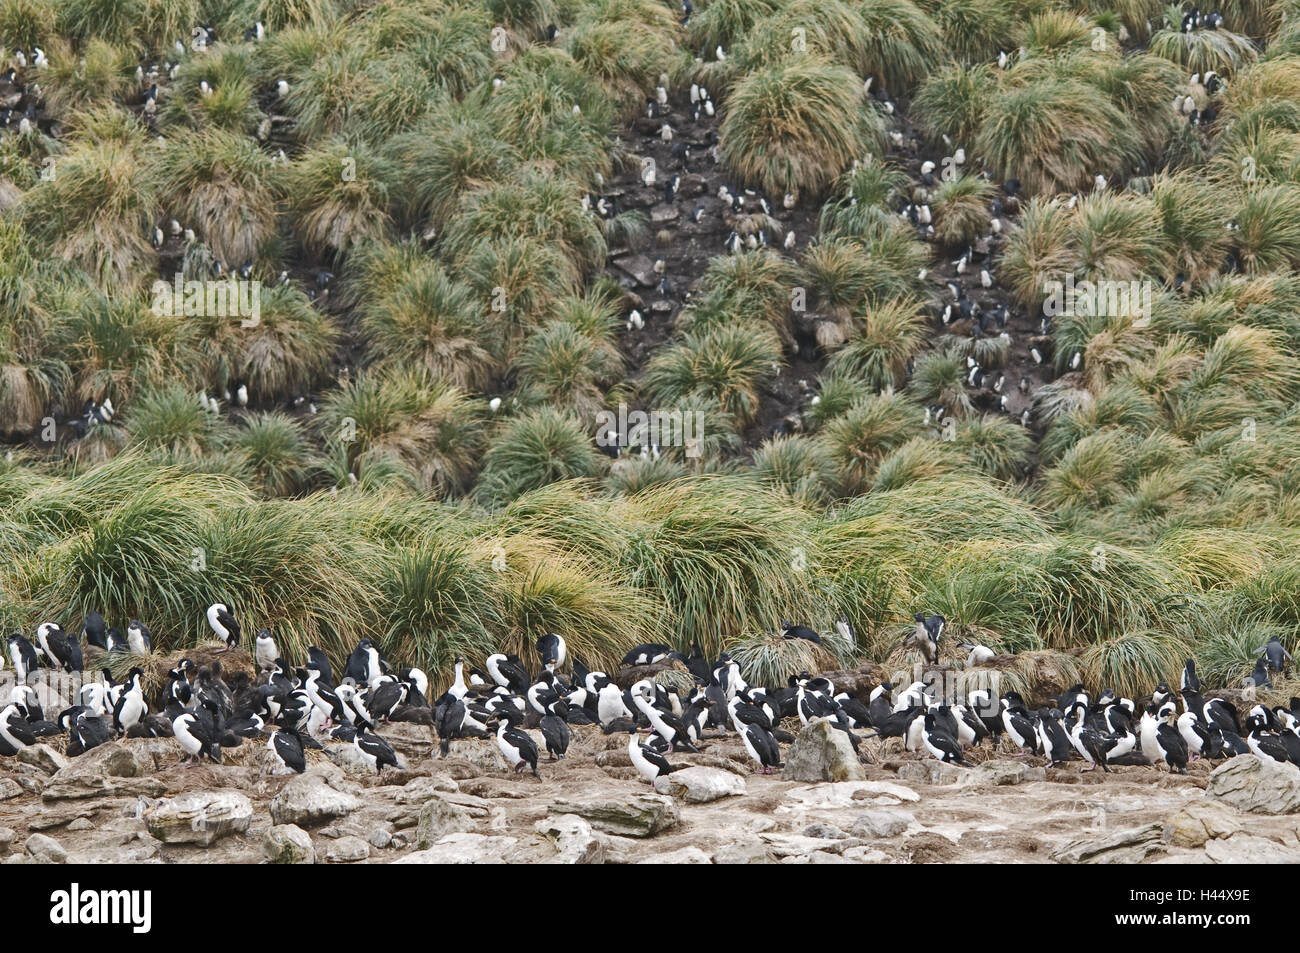 Großbritannien, die Falkland-Inseln, neuen Island, Brut Kolonie, Phalacrocorax Atriceps, Blauaugenscharben, Eudyptes Chrysocome, rock Pinguine, Stockfoto